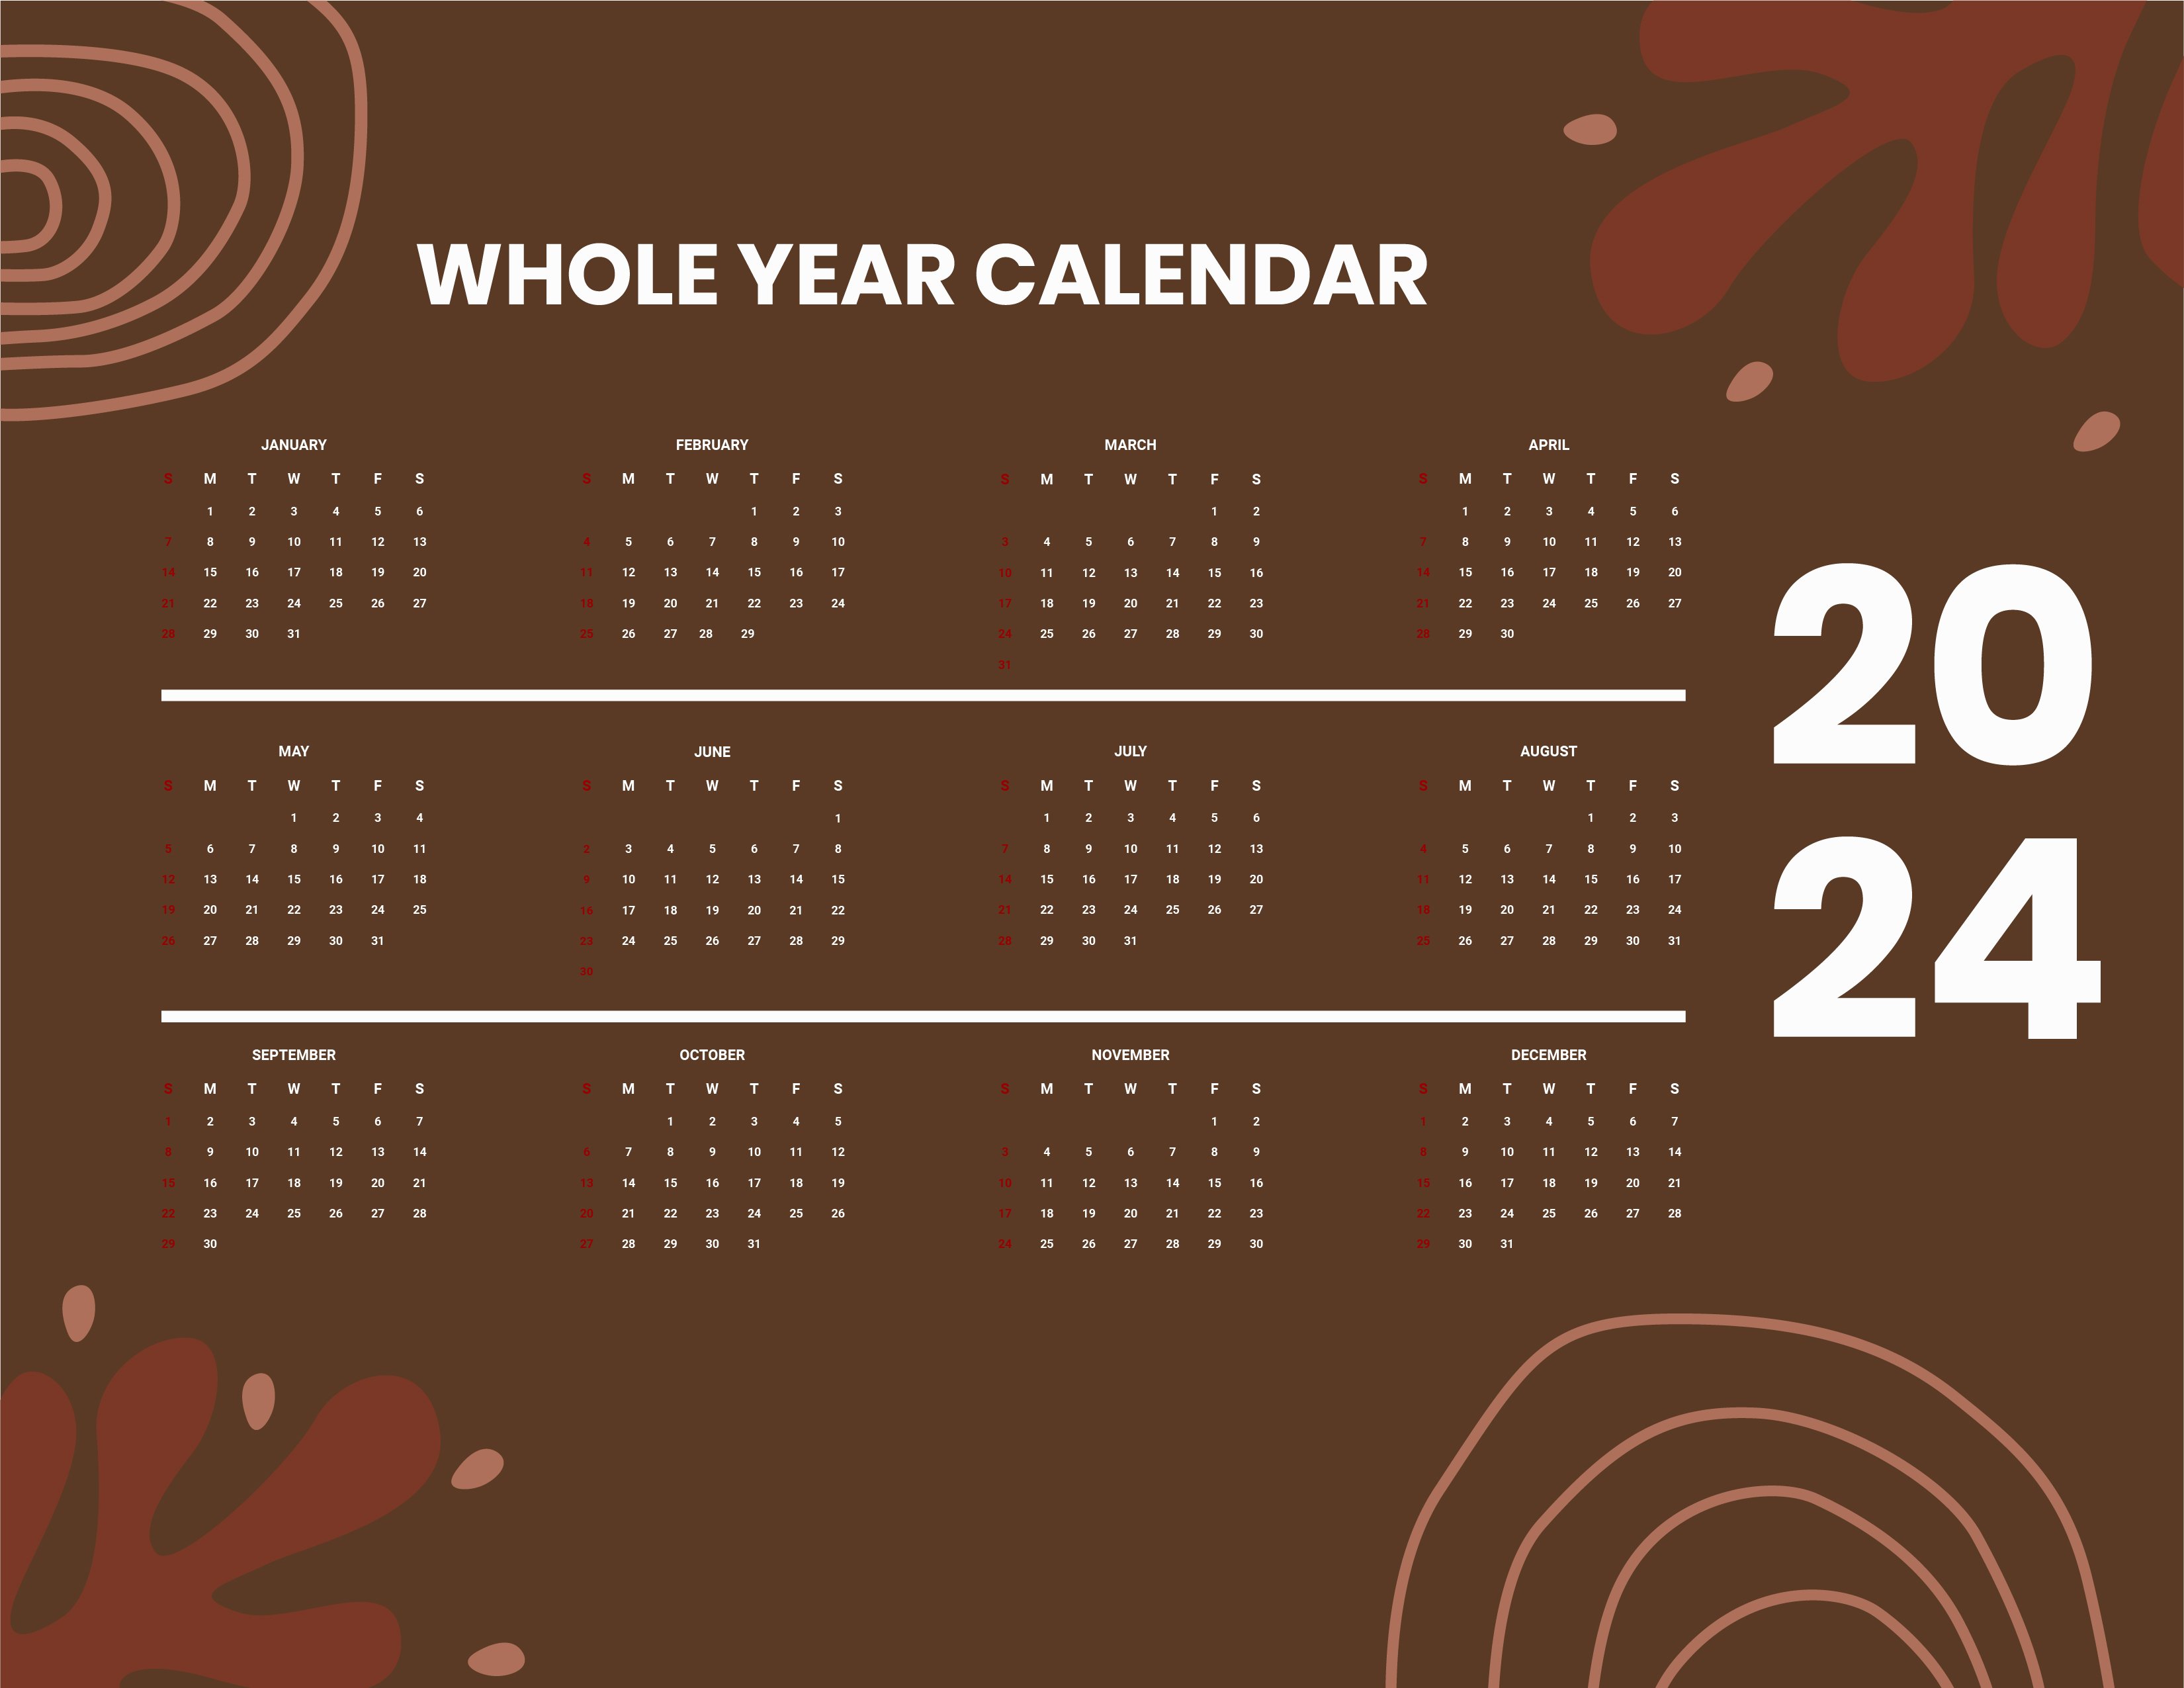 Year 2024 Calendar Download in Word, Google Docs, Illustrator, EPS